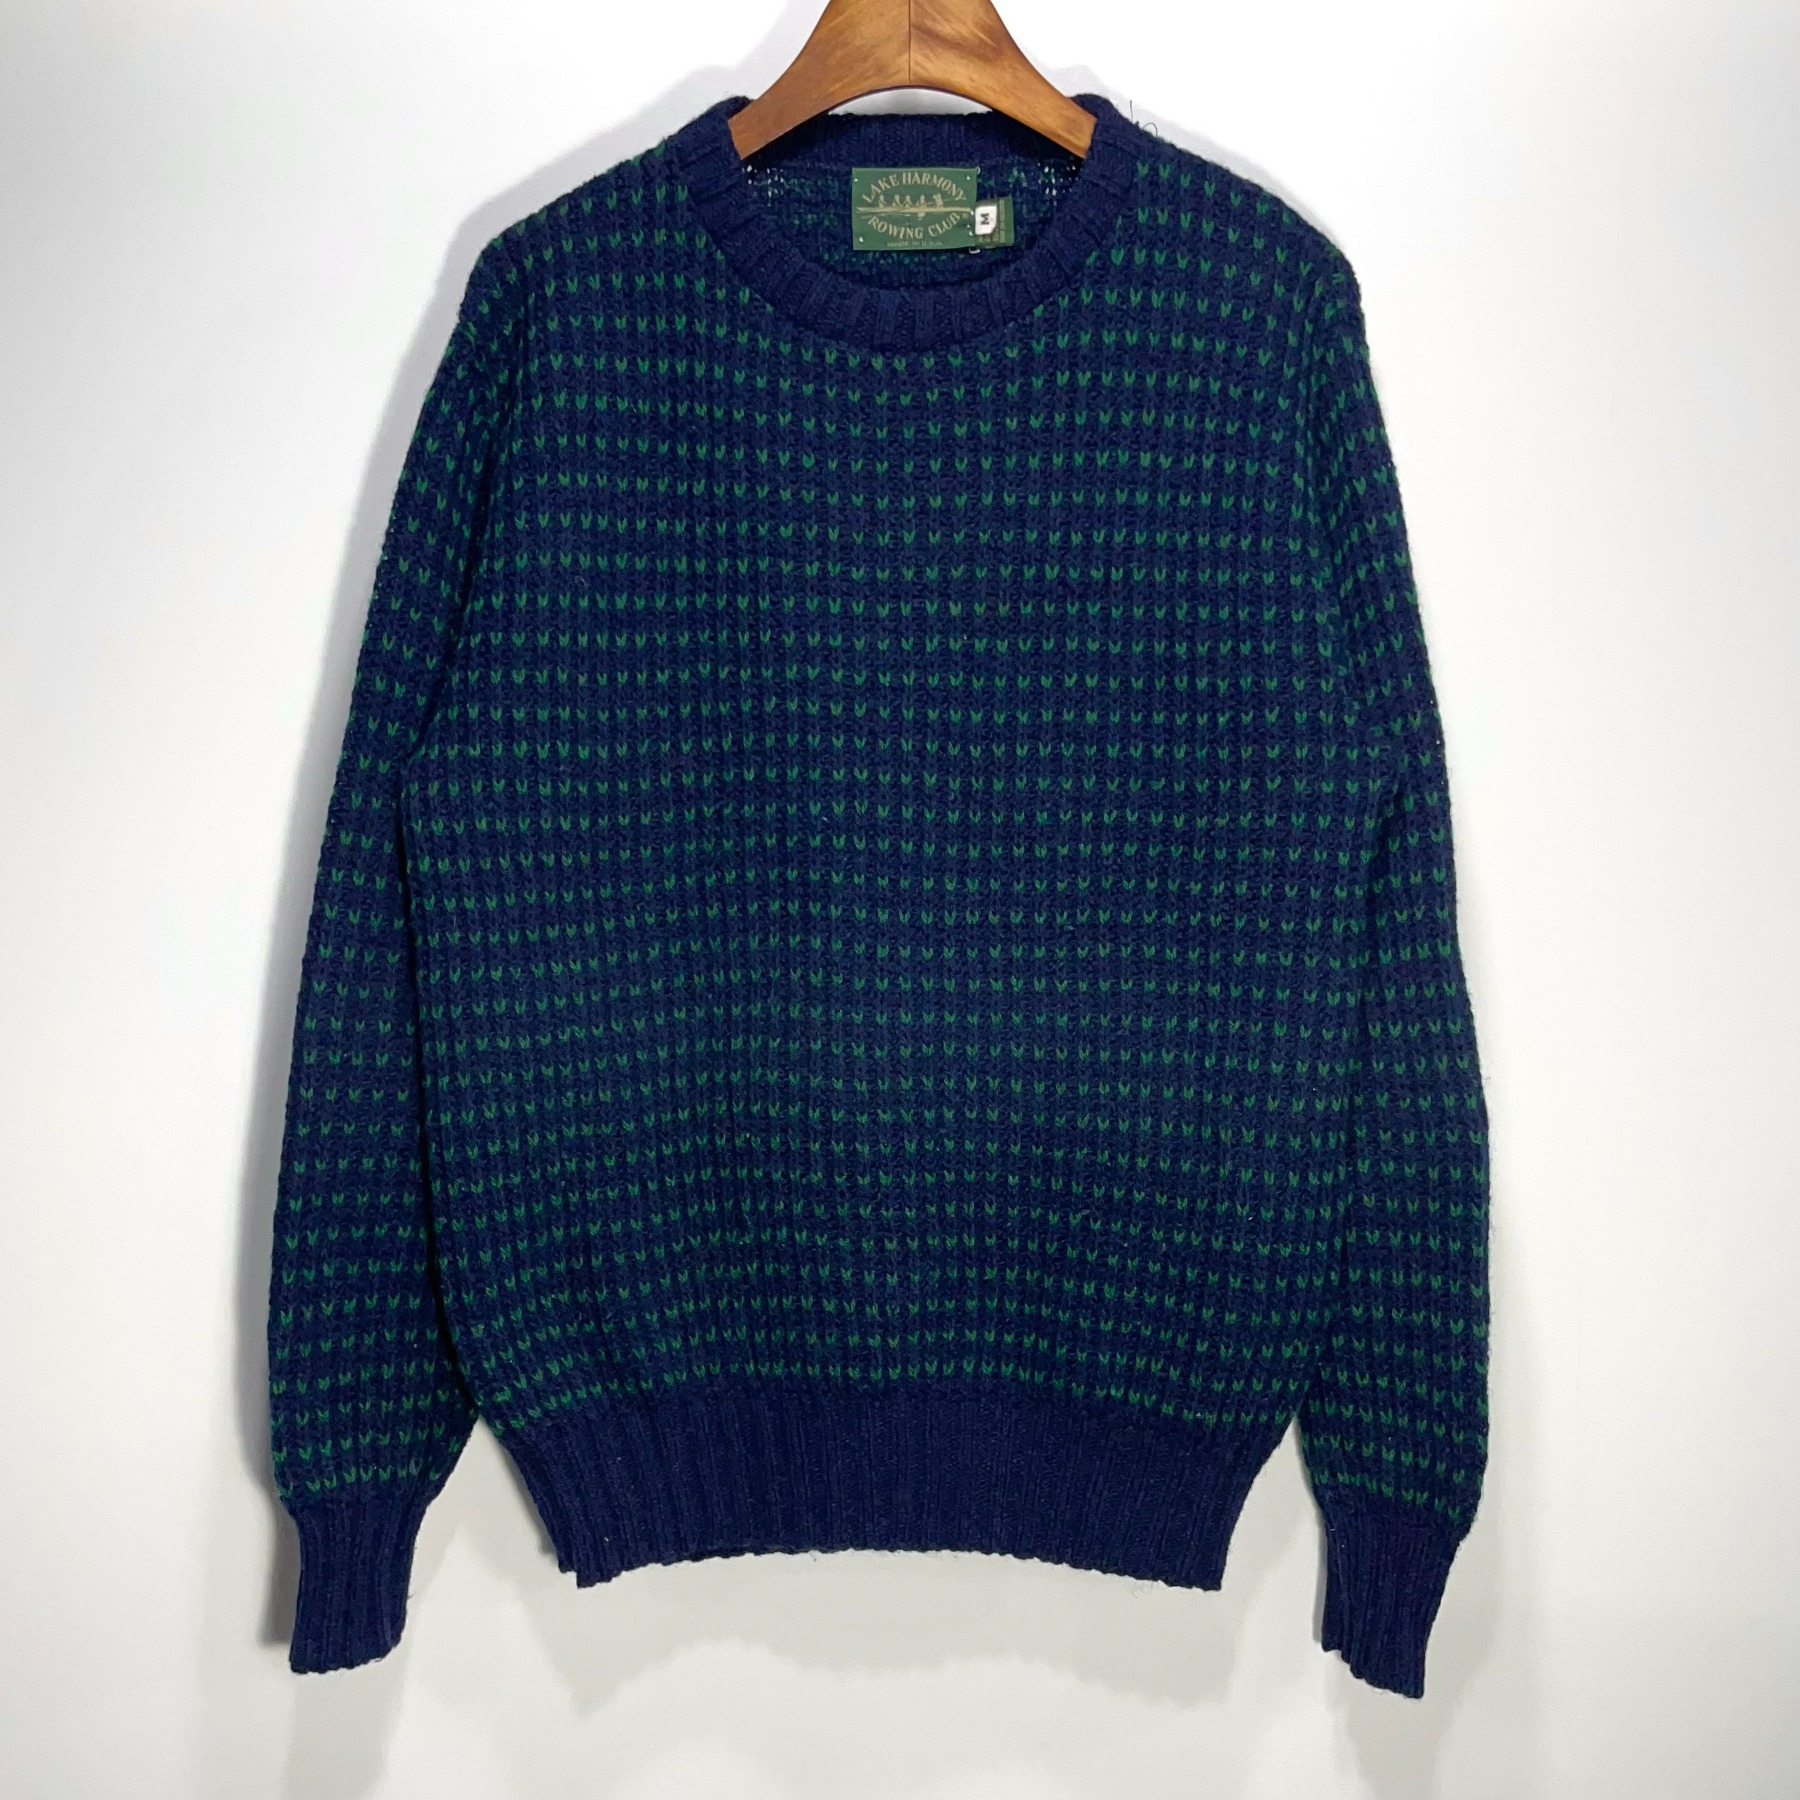 Vintage Birdseye Sweater (Made in USA) - M